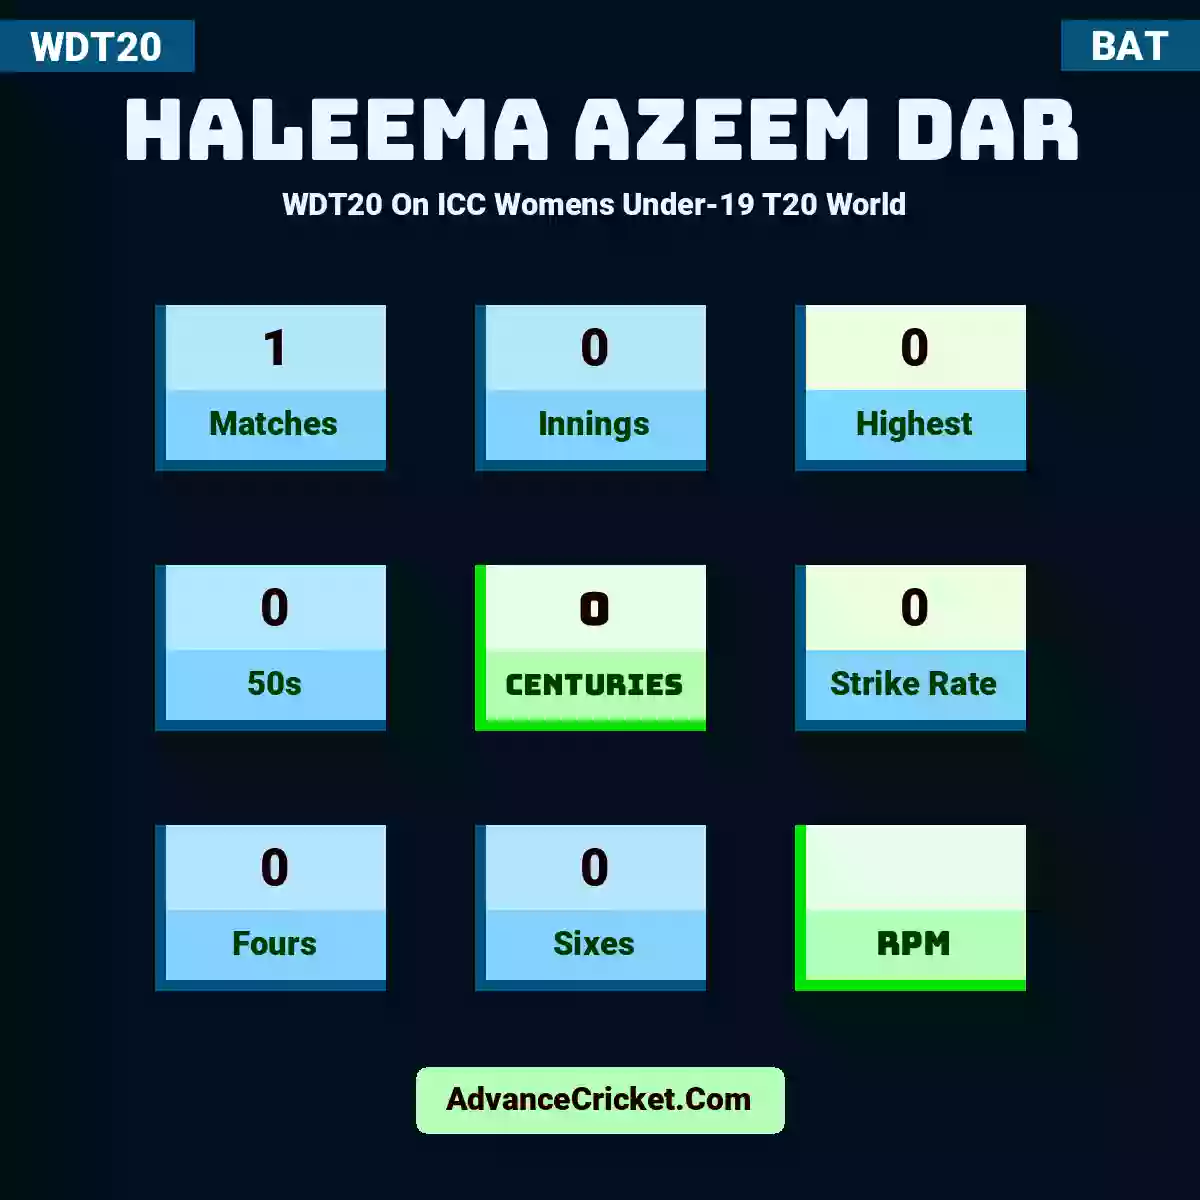 Haleema Azeem Dar WDT20  On ICC Womens Under-19 T20 World , Haleema Azeem Dar played 1 matches, scored 0 runs as highest, 0 half-centuries, and 0 centuries, with a strike rate of 0. H.Azeem.Dar hit 0 fours and 0 sixes.